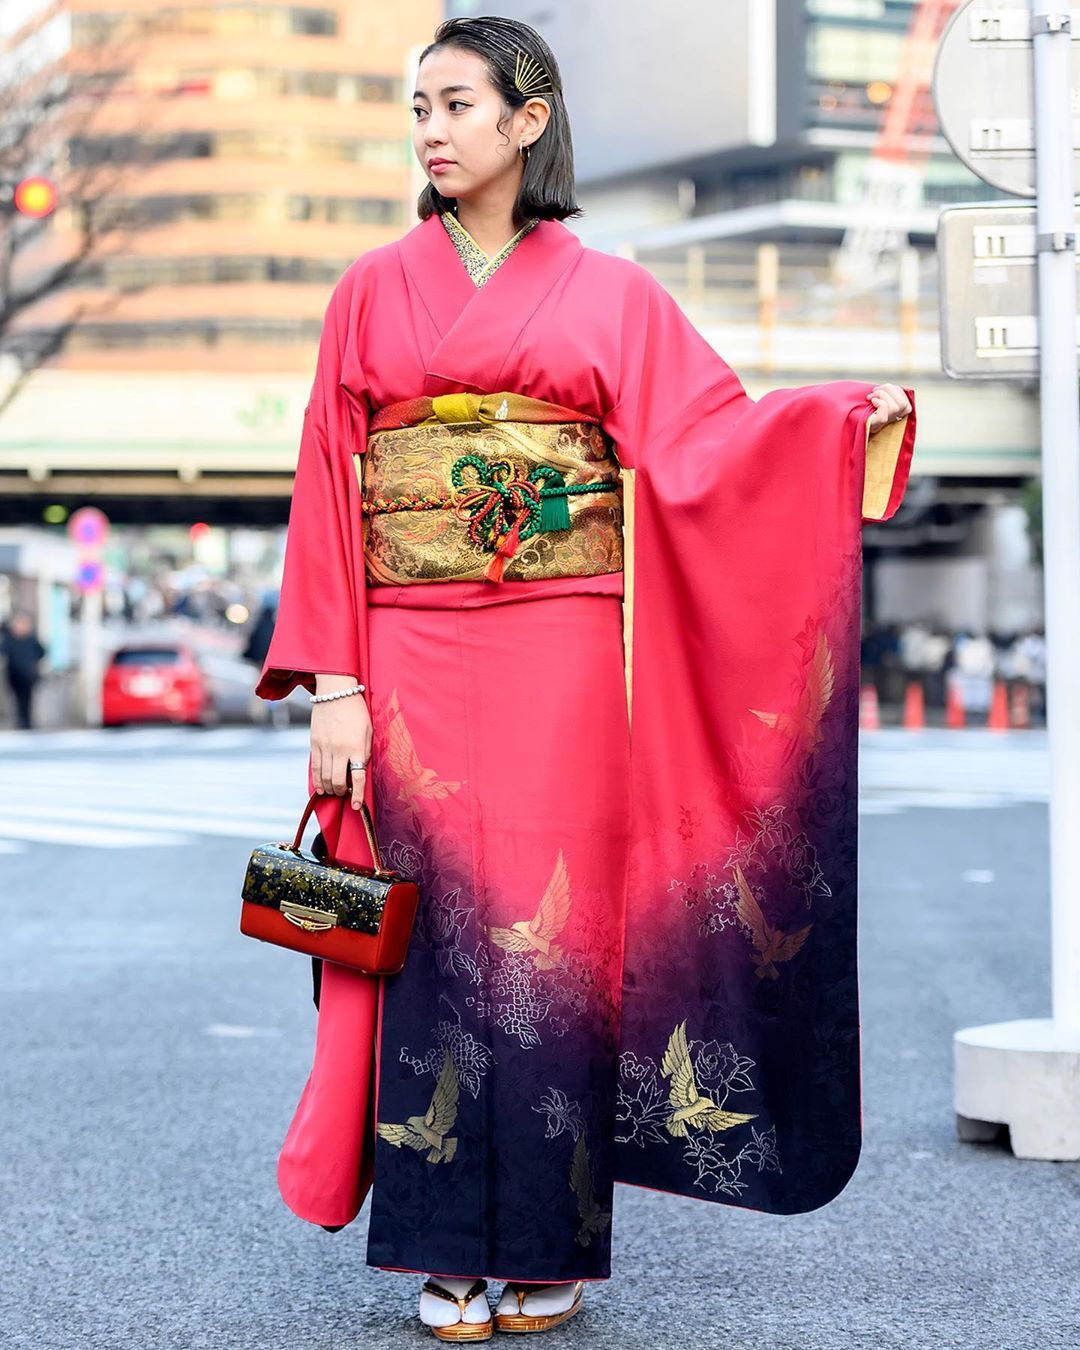 Tokyo Fashion: Traditional Japanese furisode kimono on the streets of ...